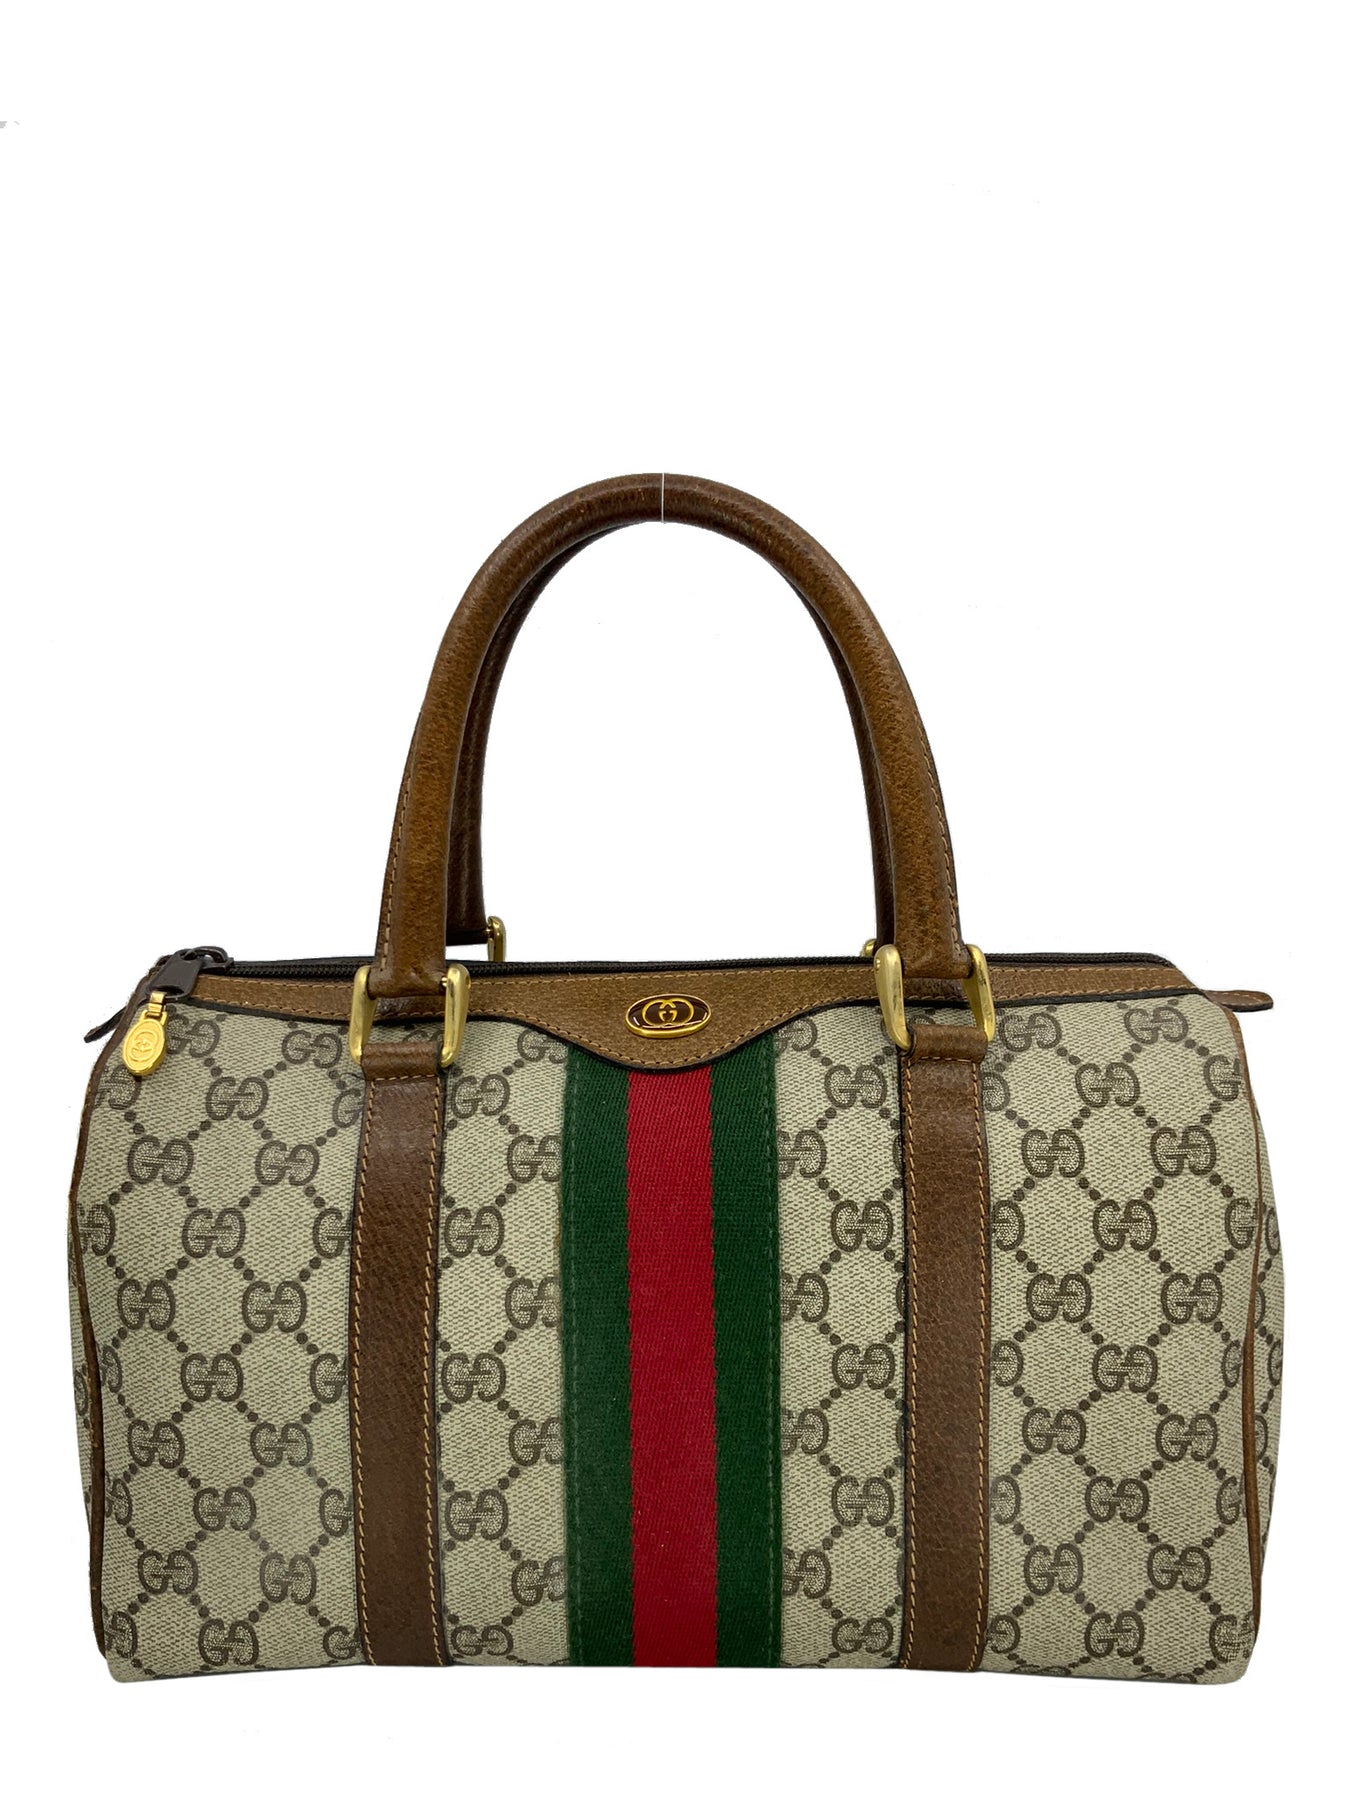 Gucci Boston Bag  Gucci vintage bag, Leather handbags crossbody, Monogram  handbag